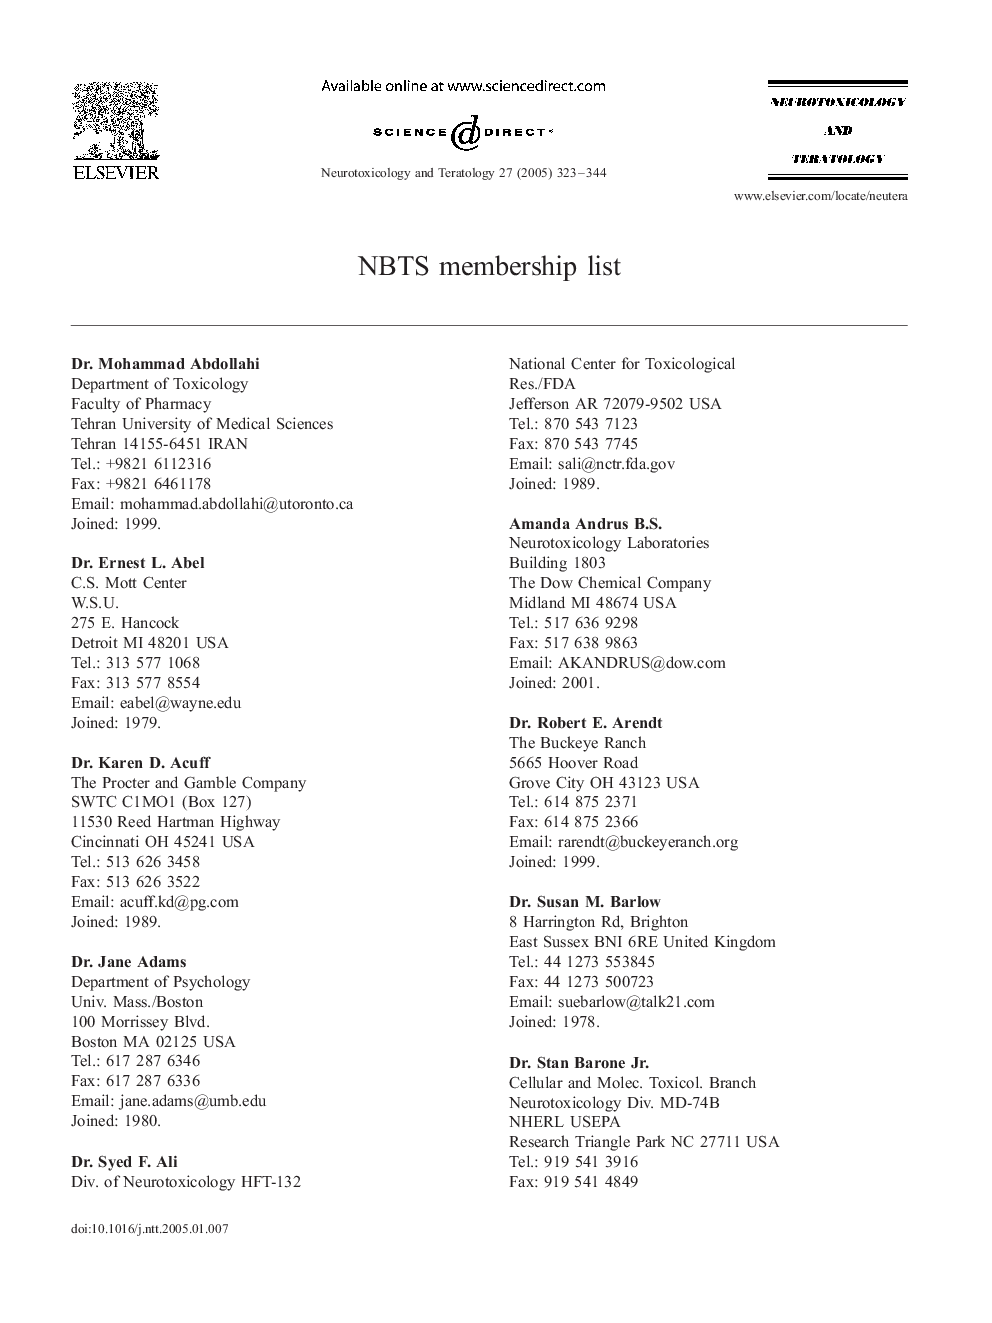 NBTS membership list